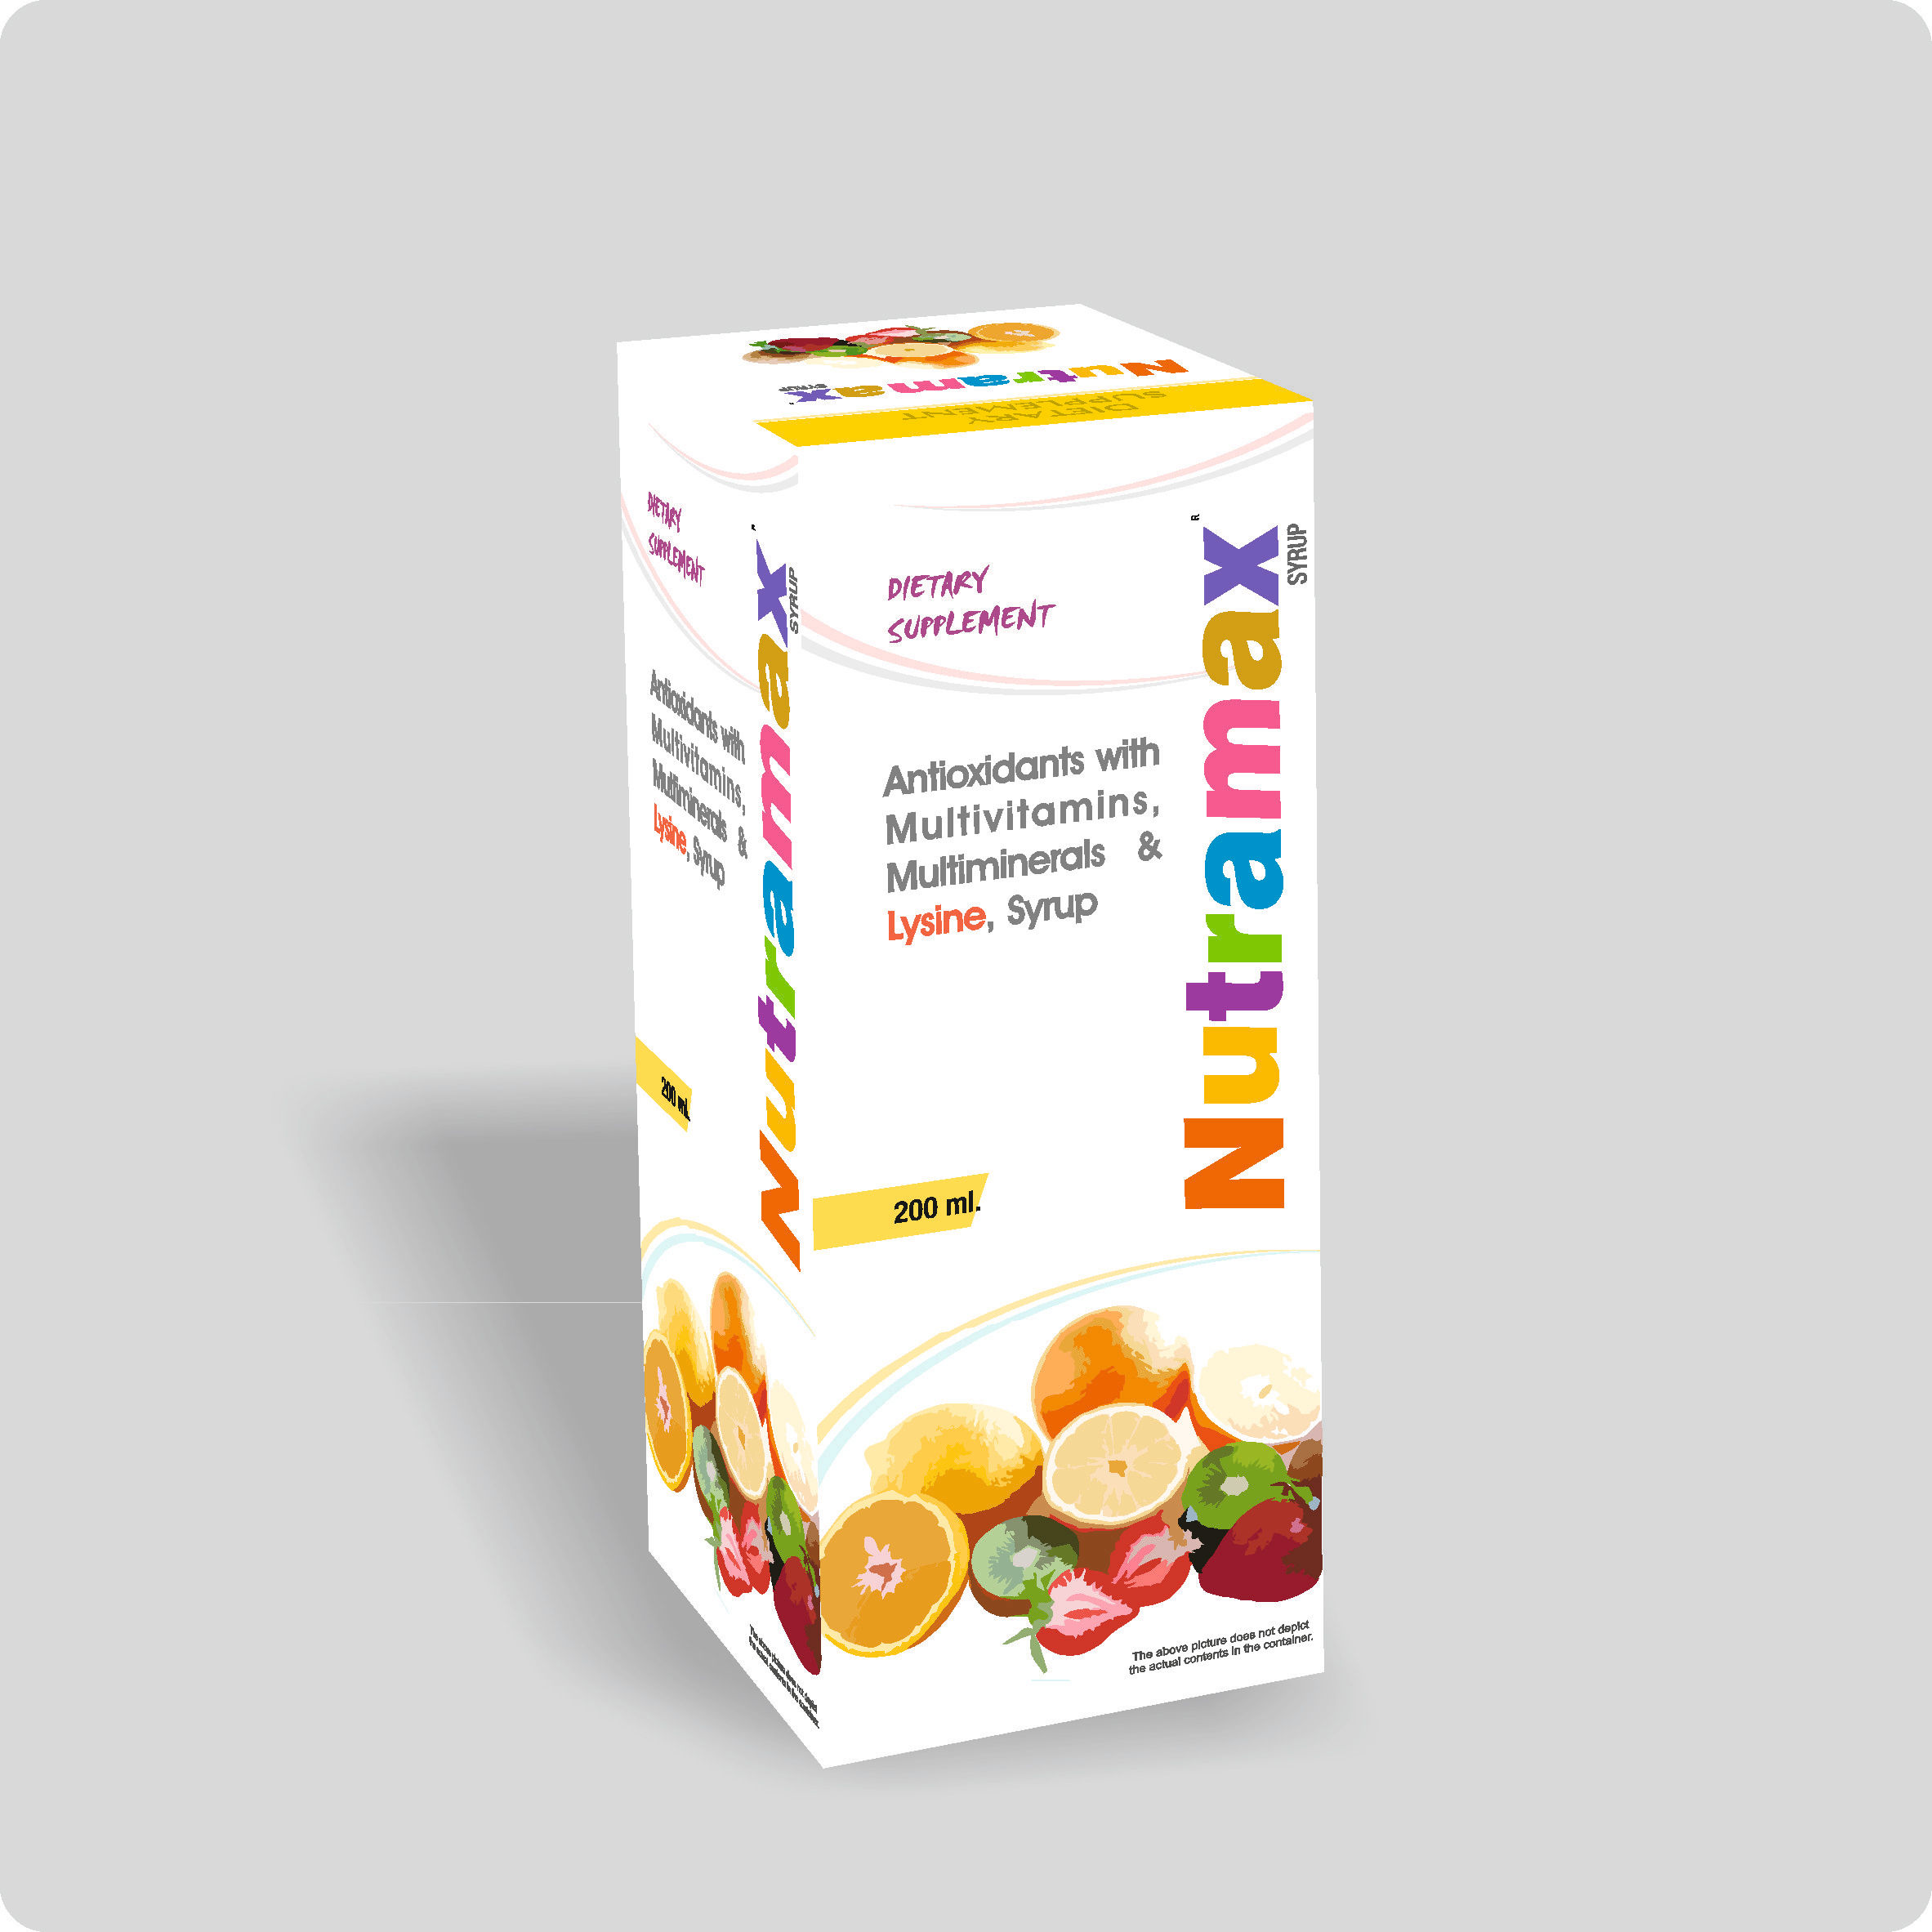 Antioxidants with Multivitamins